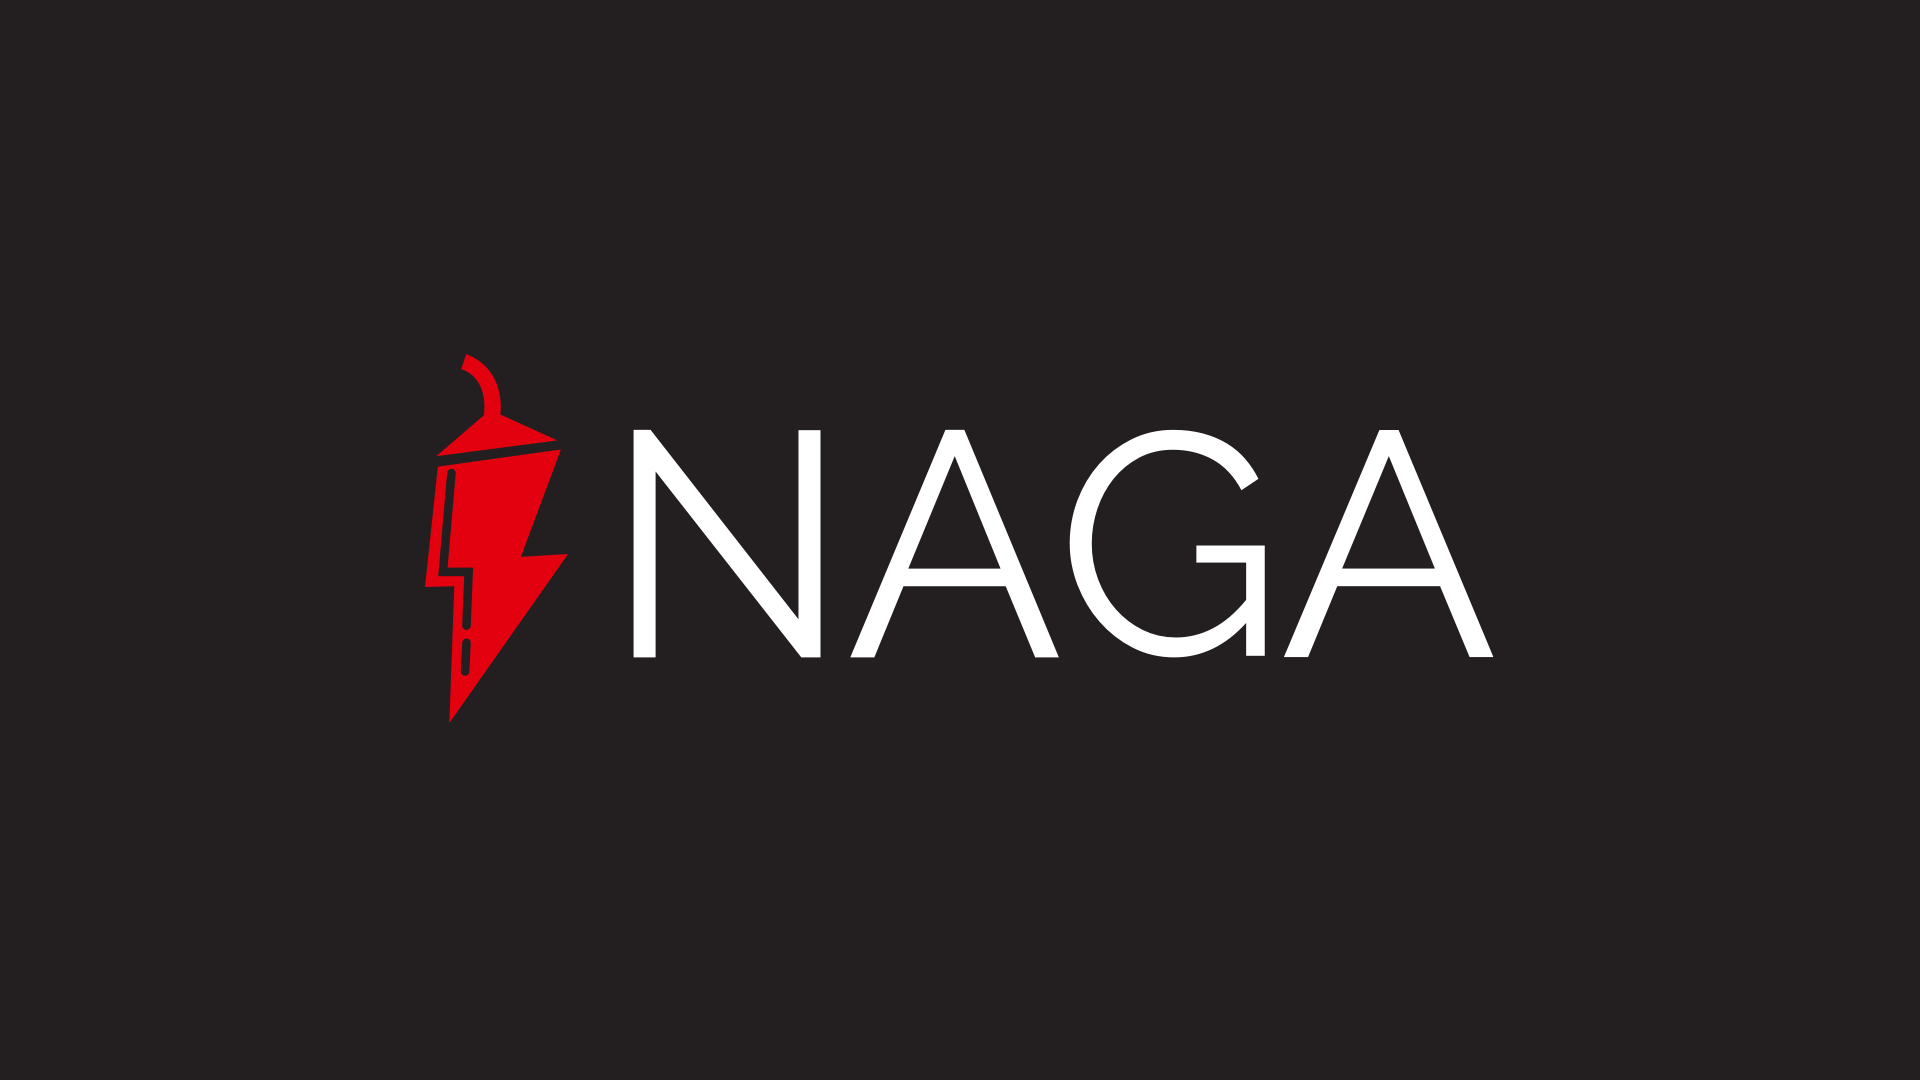 NAGA to Revolutionize the Financial Markets & Stock Trading